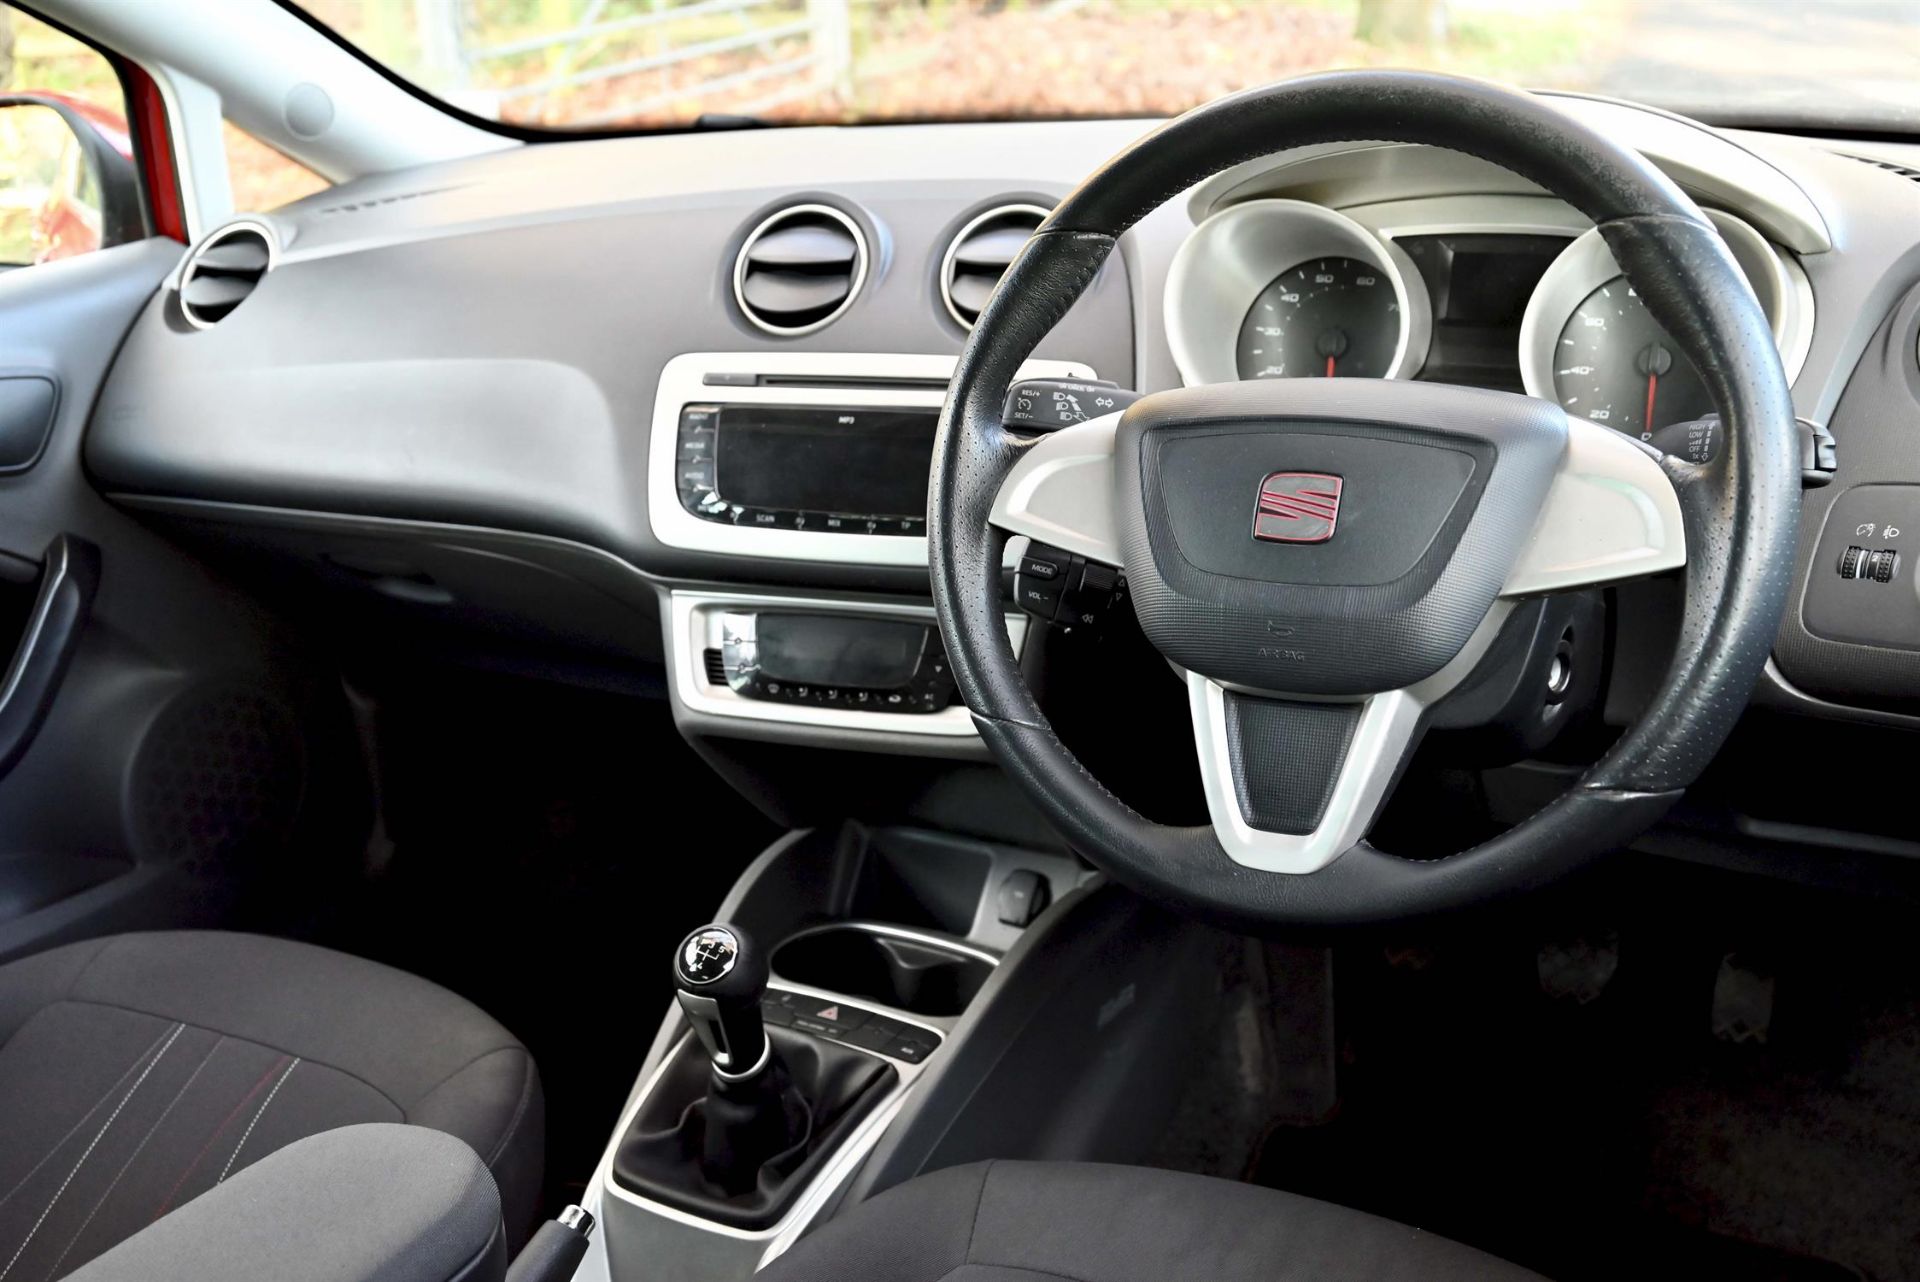 2012 SEAT Ibiza 1.4 SE 'COPA' Estate. Registration number AO61 XKX. Petrol, 5-Speed Manual. - Image 16 of 16